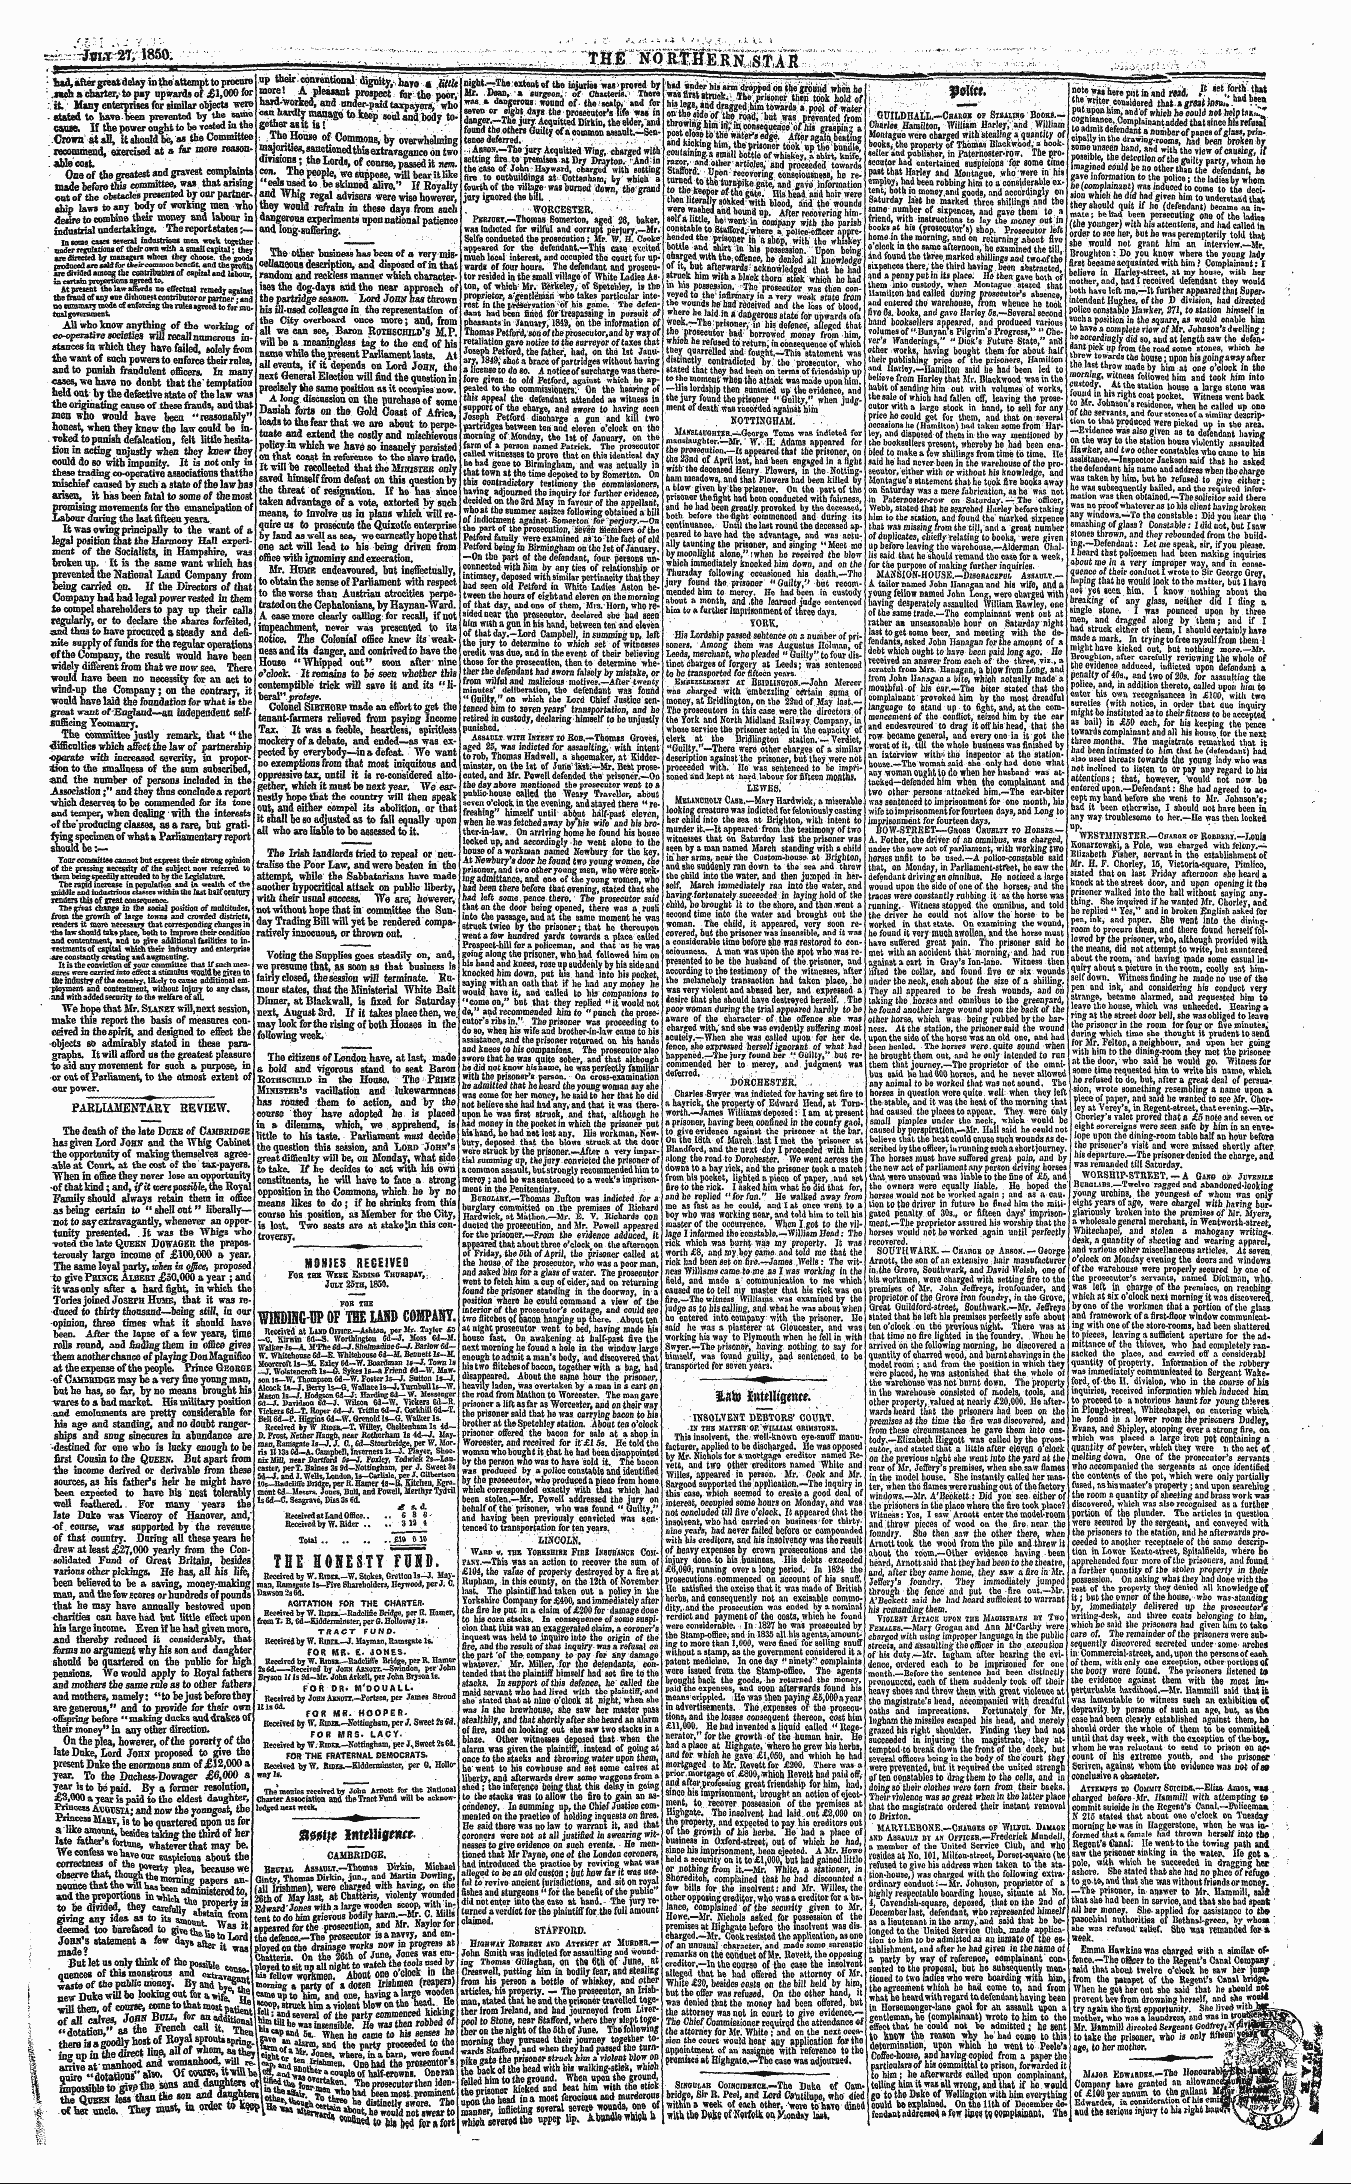 Northern Star (1837-1852): jS F Y, 3rd edition - Monies Received Fob Ihb Webb: Esdlso Thu...